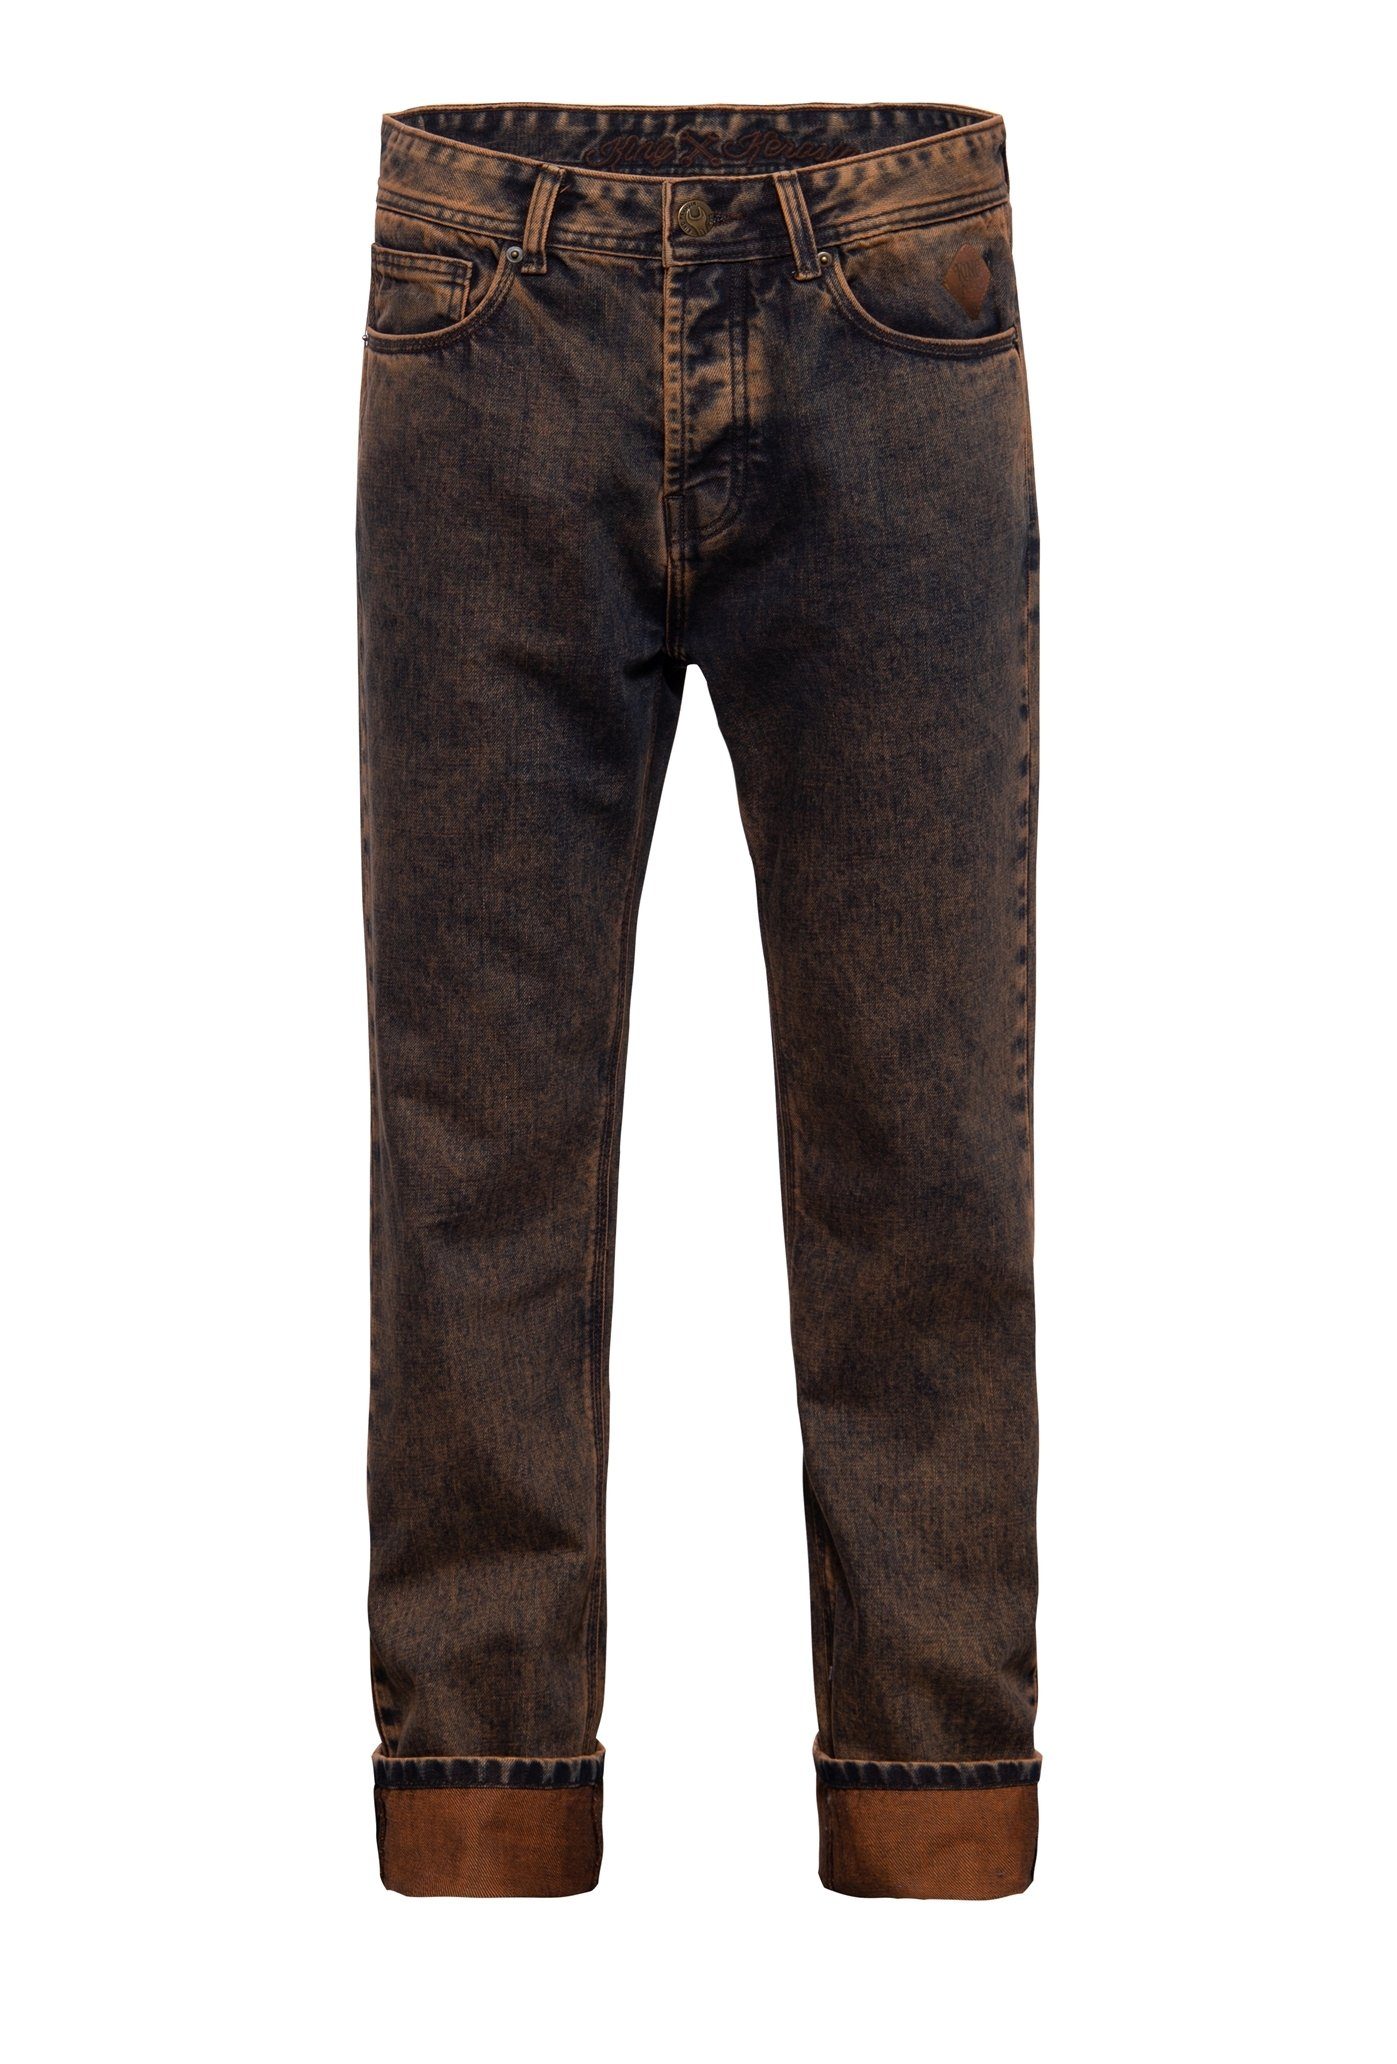 KingKerosin Dirt 5-Pocket-Jeans rostbraun Washed Scott